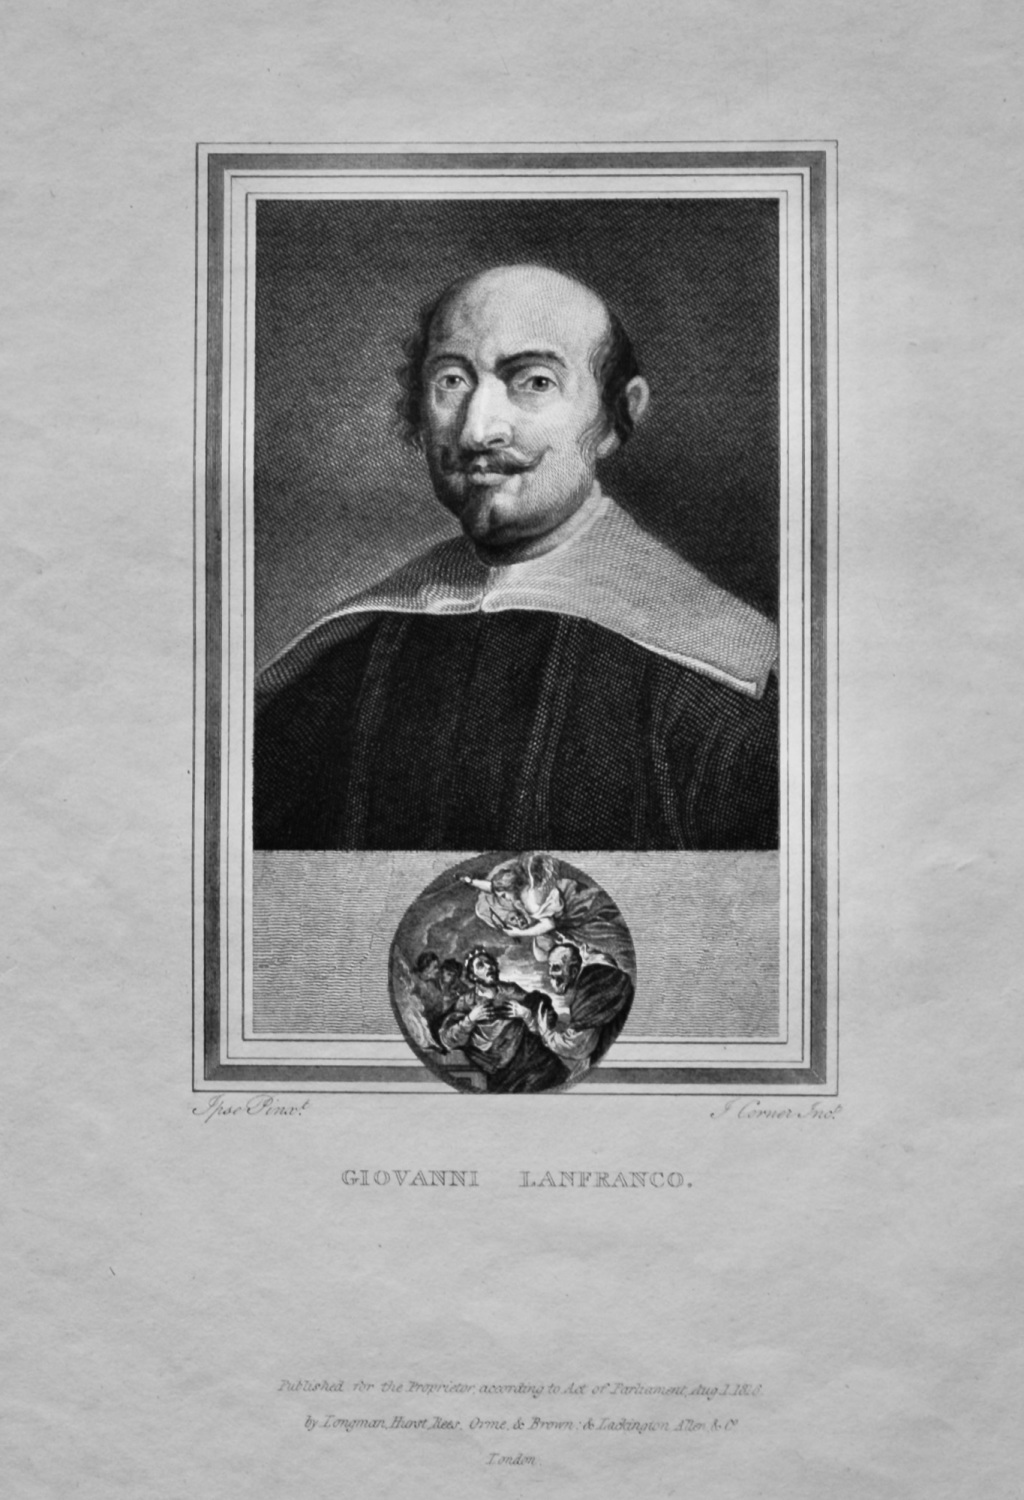 Giovanni  Lanfranco.  1825.